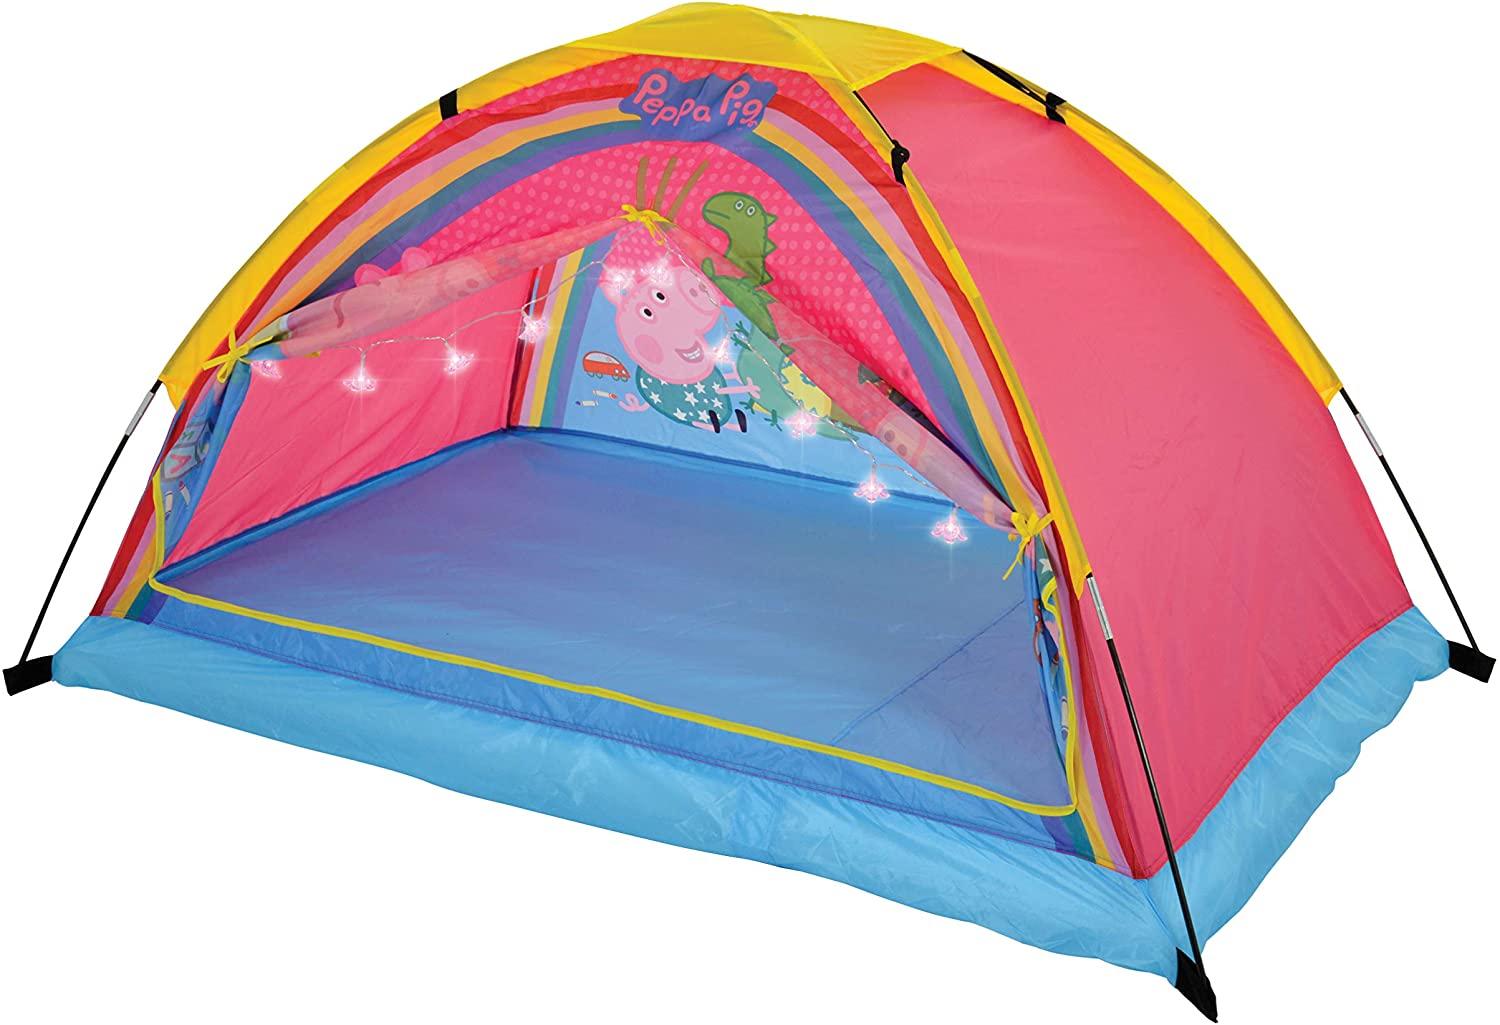 Peppa Pig Dream Den Tent Toymaster Ballina